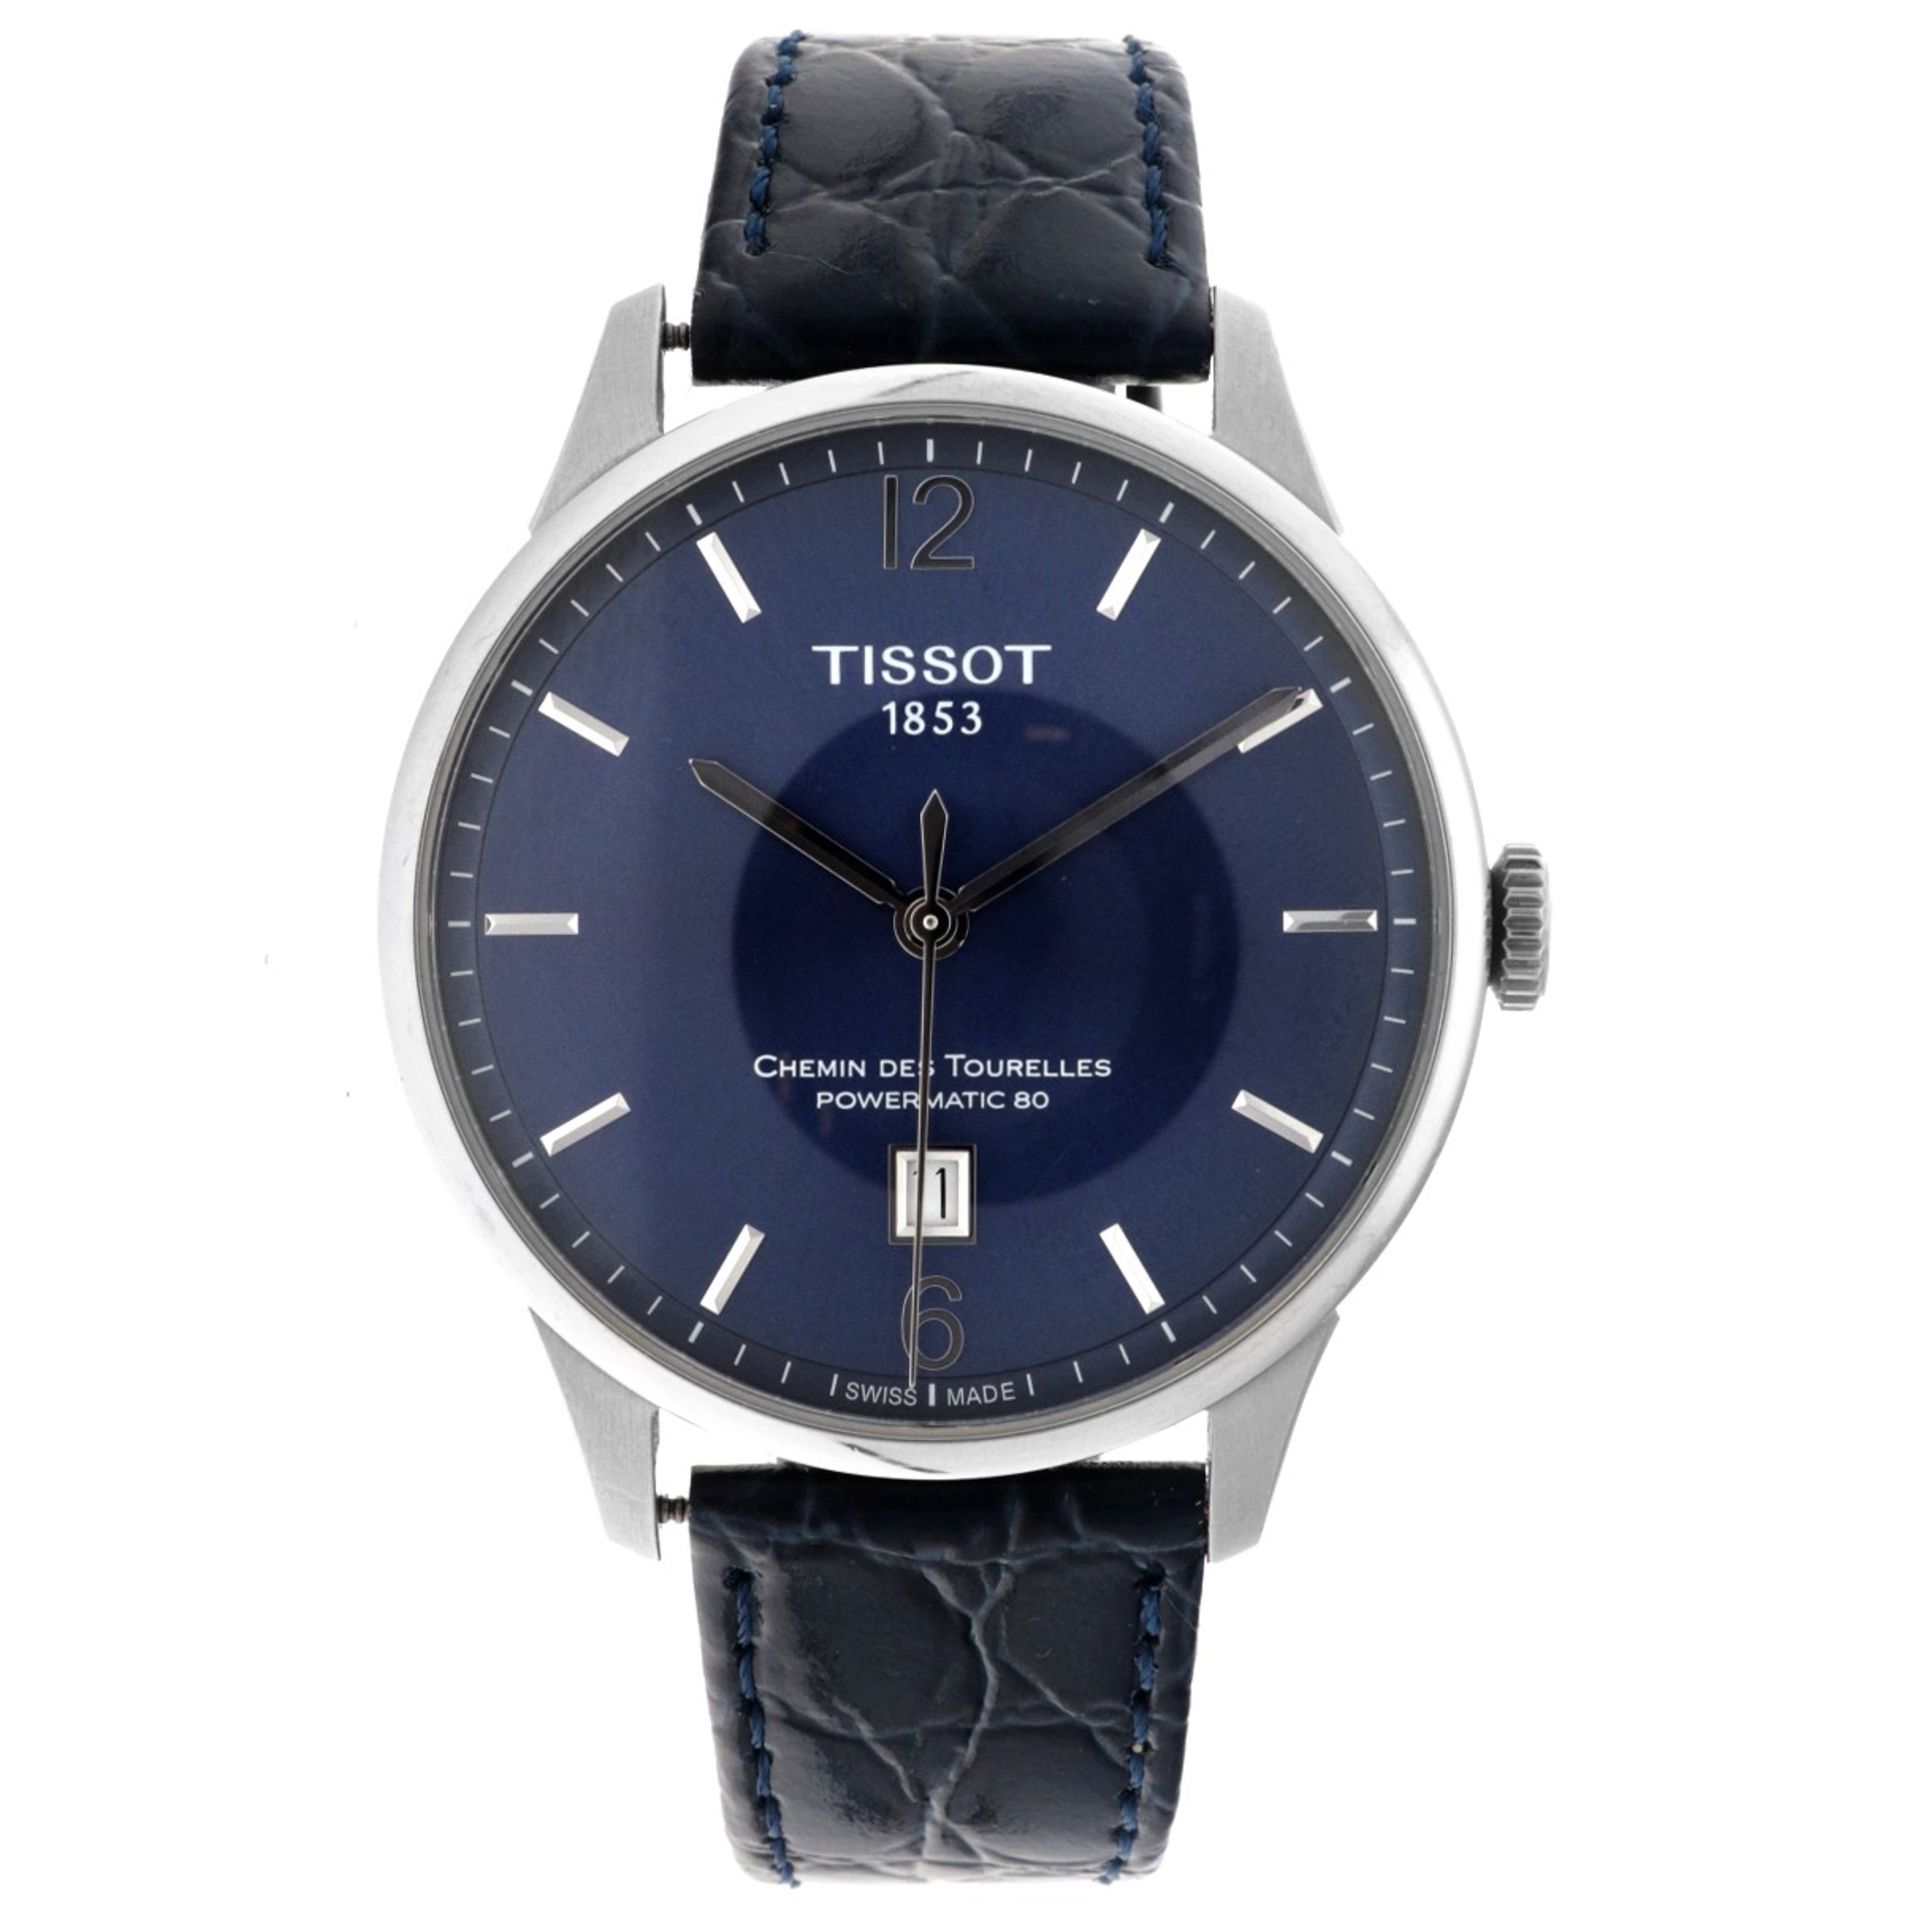 No Reserve - Tissot Chemin de Tourelles T099407 - Men's watch.